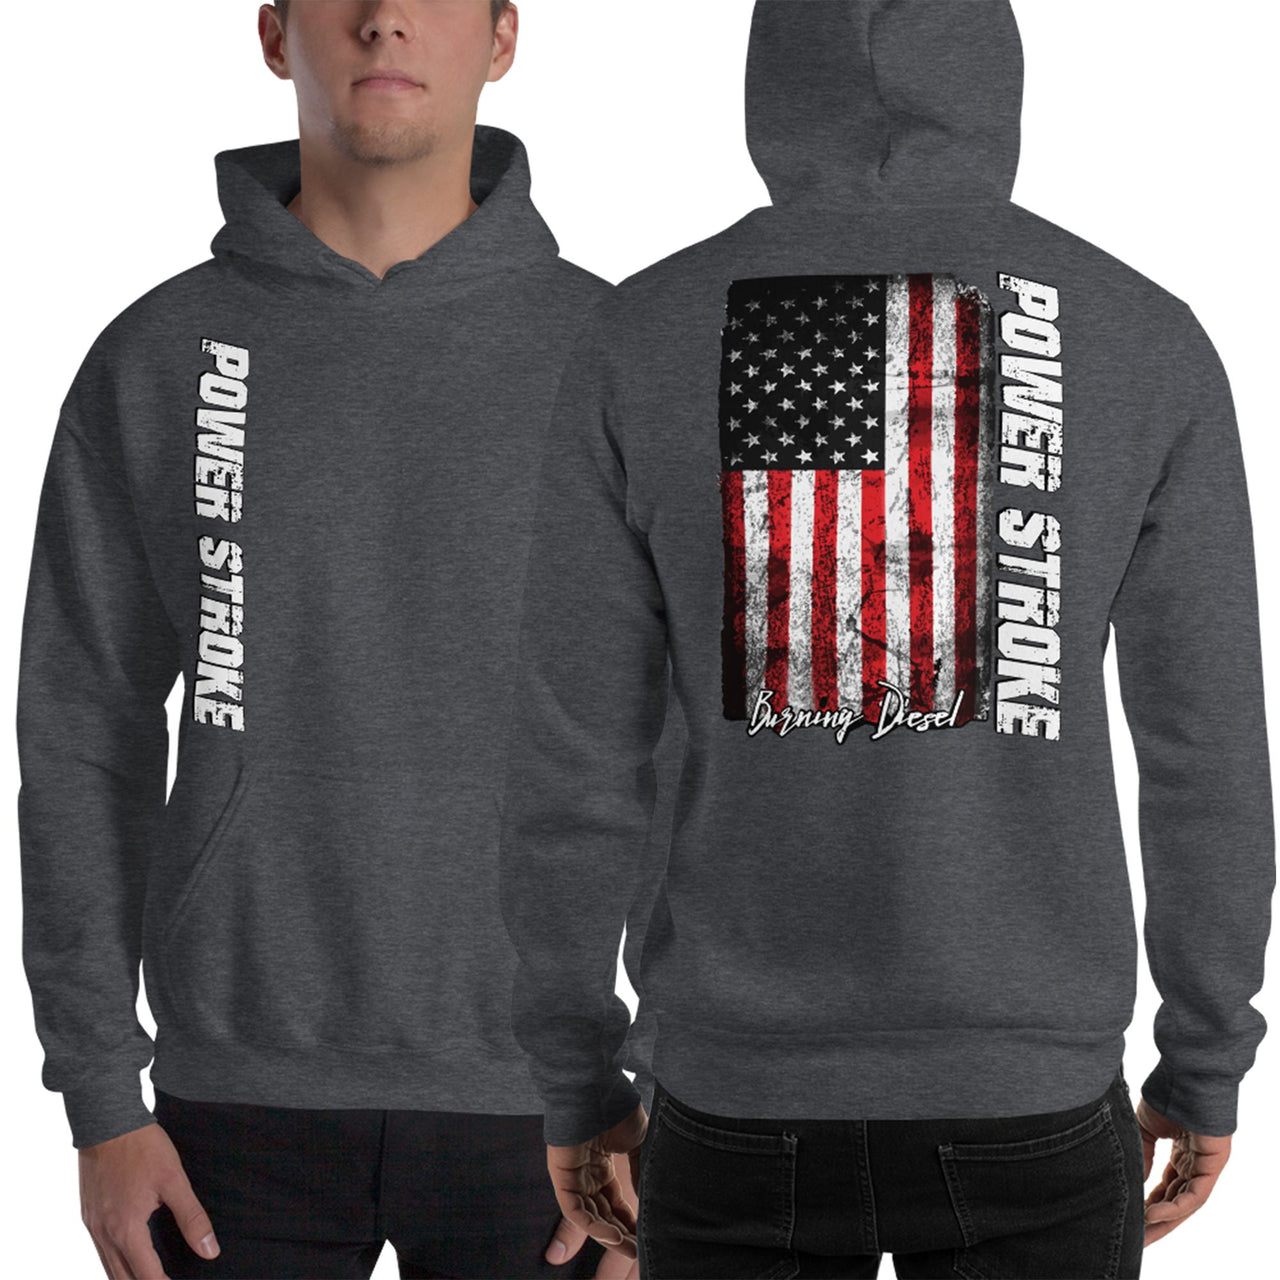 Powerstroke Hoodie with American Flag modeled in grey